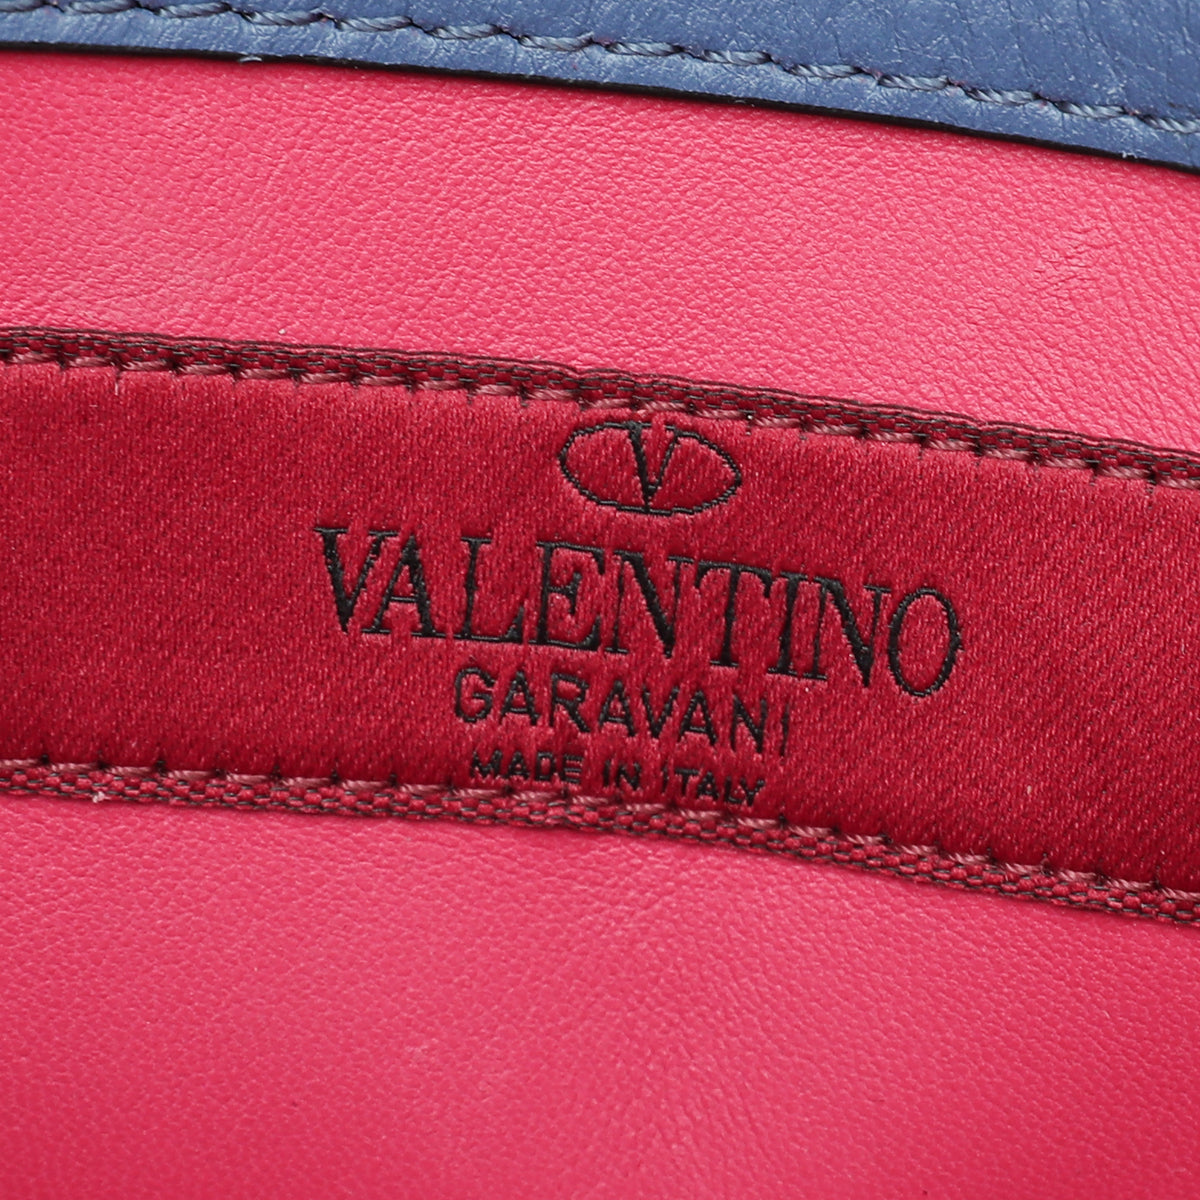 Valentino Multicolor Colorblock Rockstud Glam Lock Flap Bag